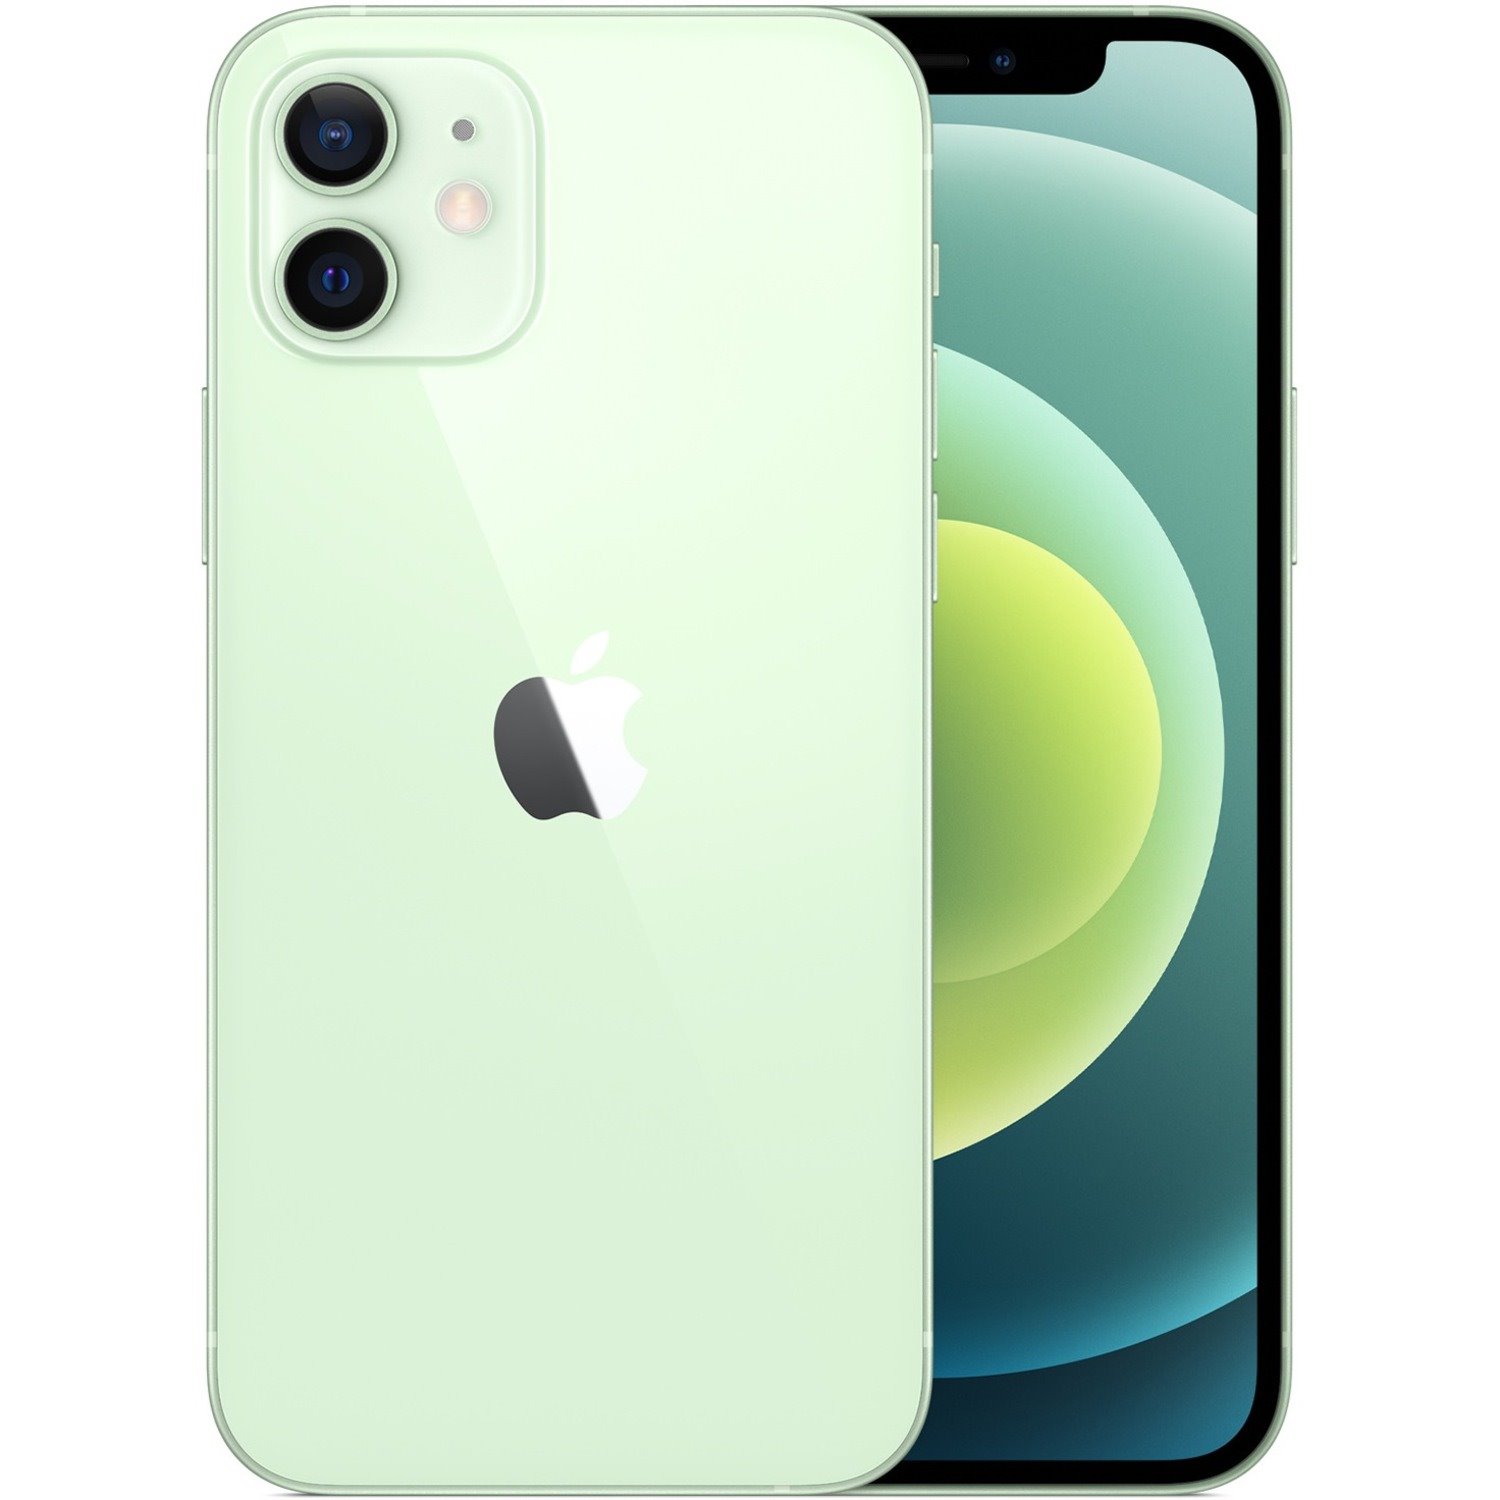 Apple iPhone 12 256 GB Smartphone - 15.5 cm (6.1") OLED Full HD Plus - Hexa-core (6 Core) - 4 GB RAM - iOS 14 - 5G - Green